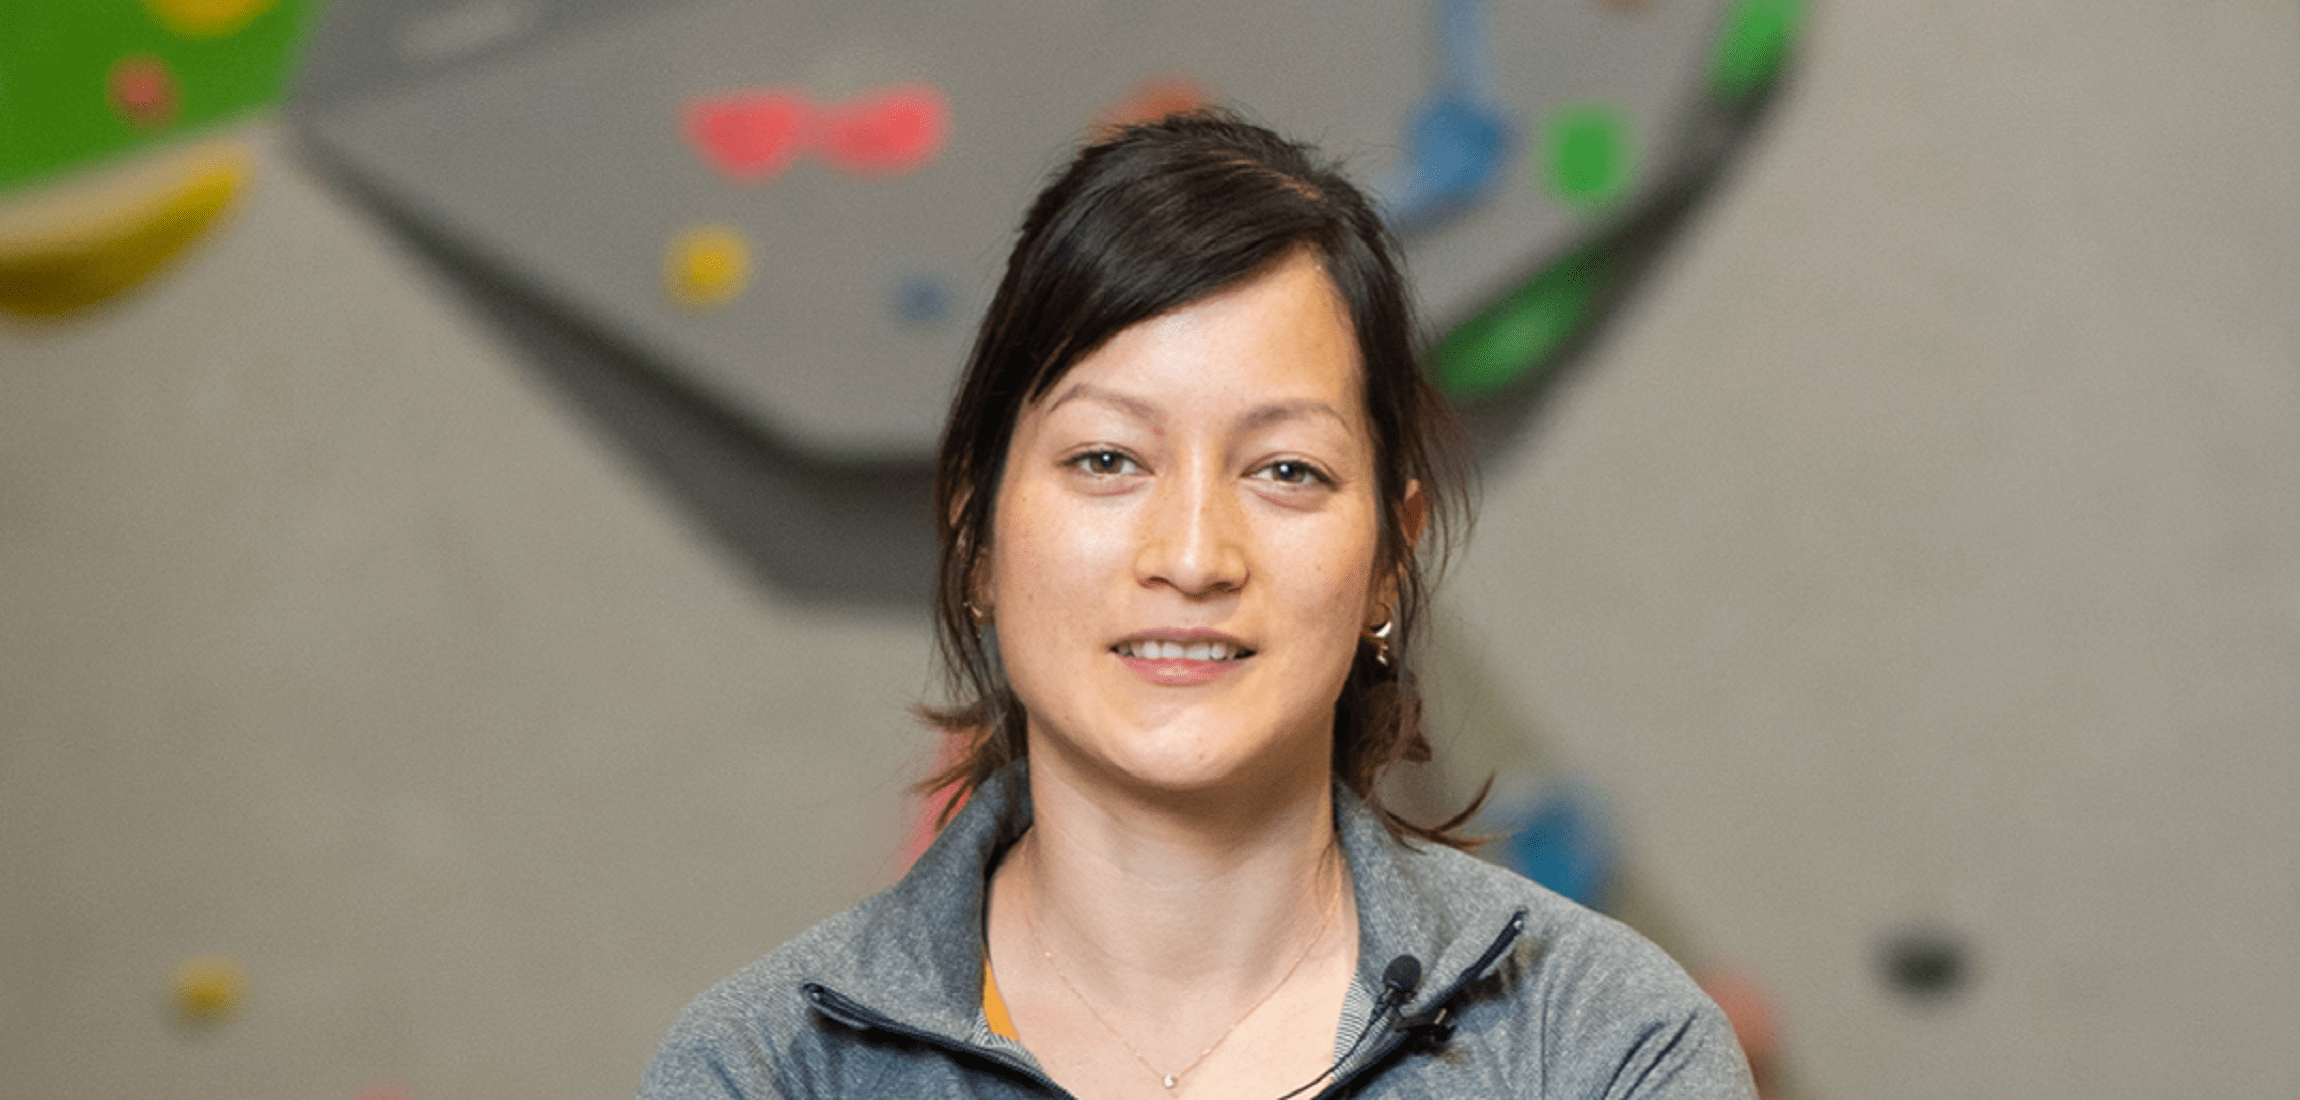 Katherine Choong <br />
the daring rock climber